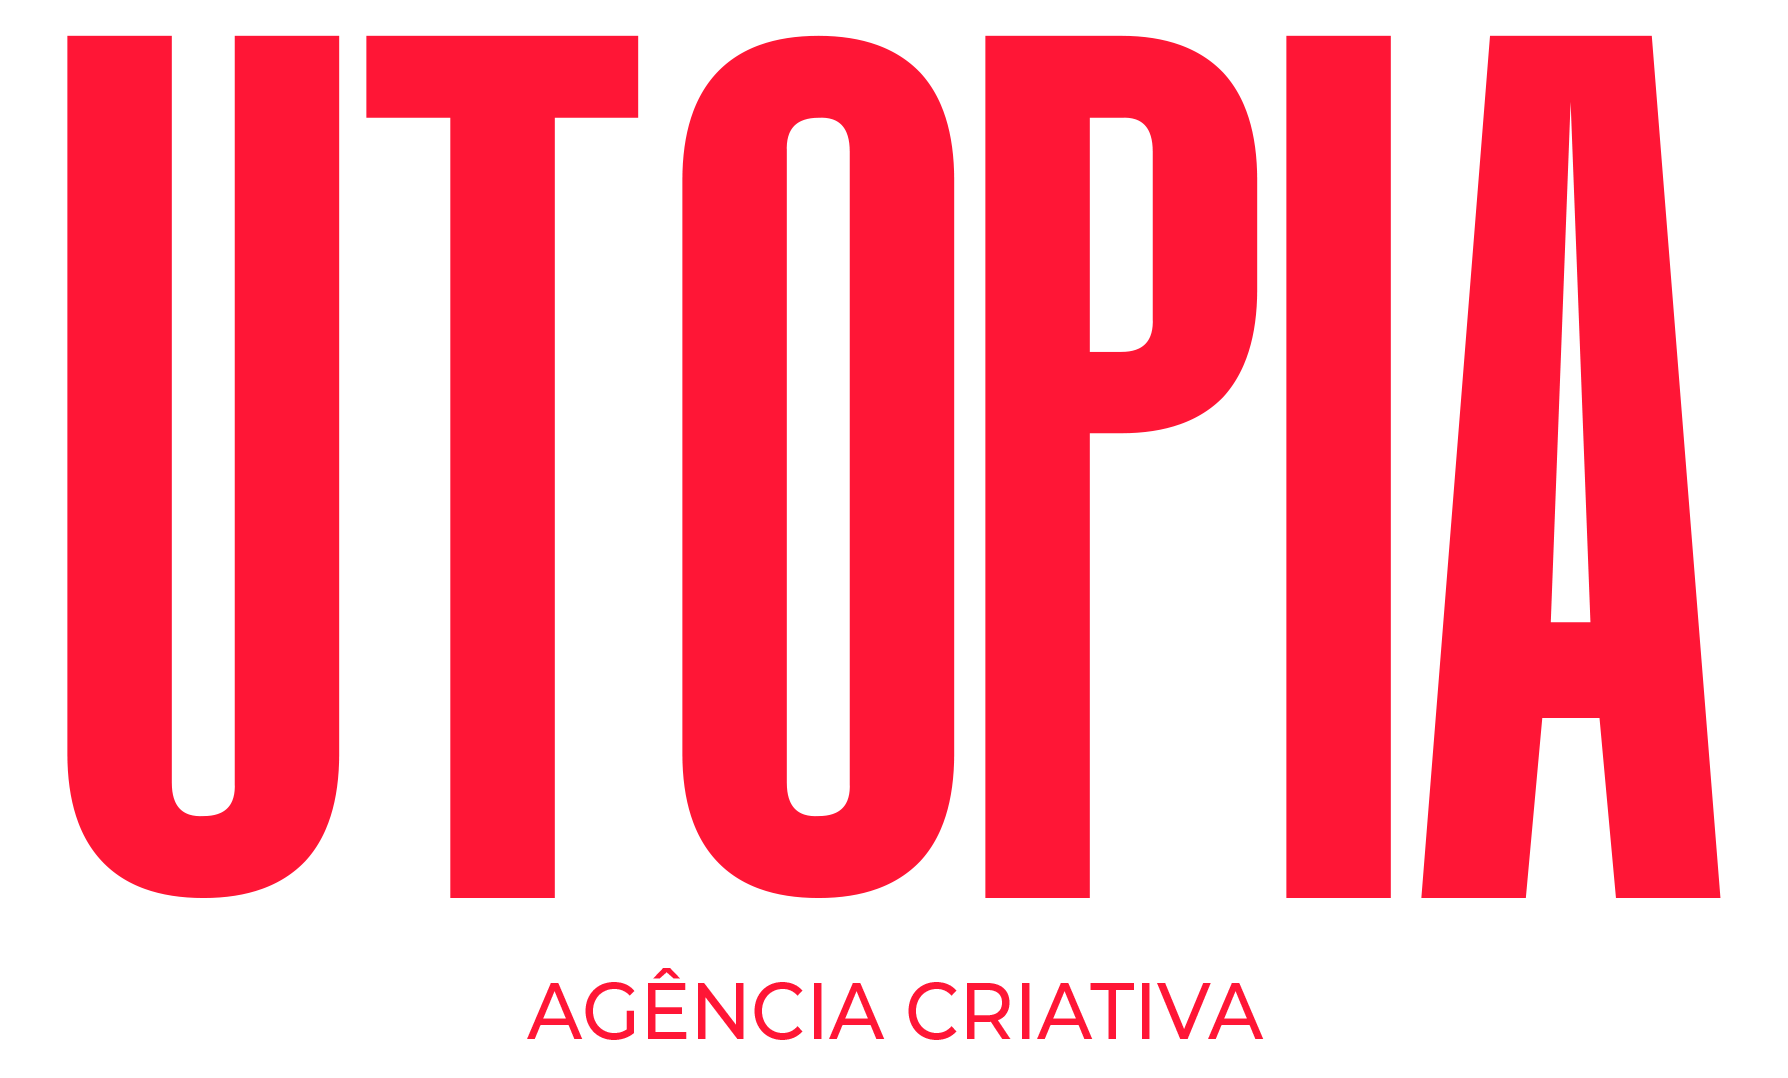 Agencia Utopia